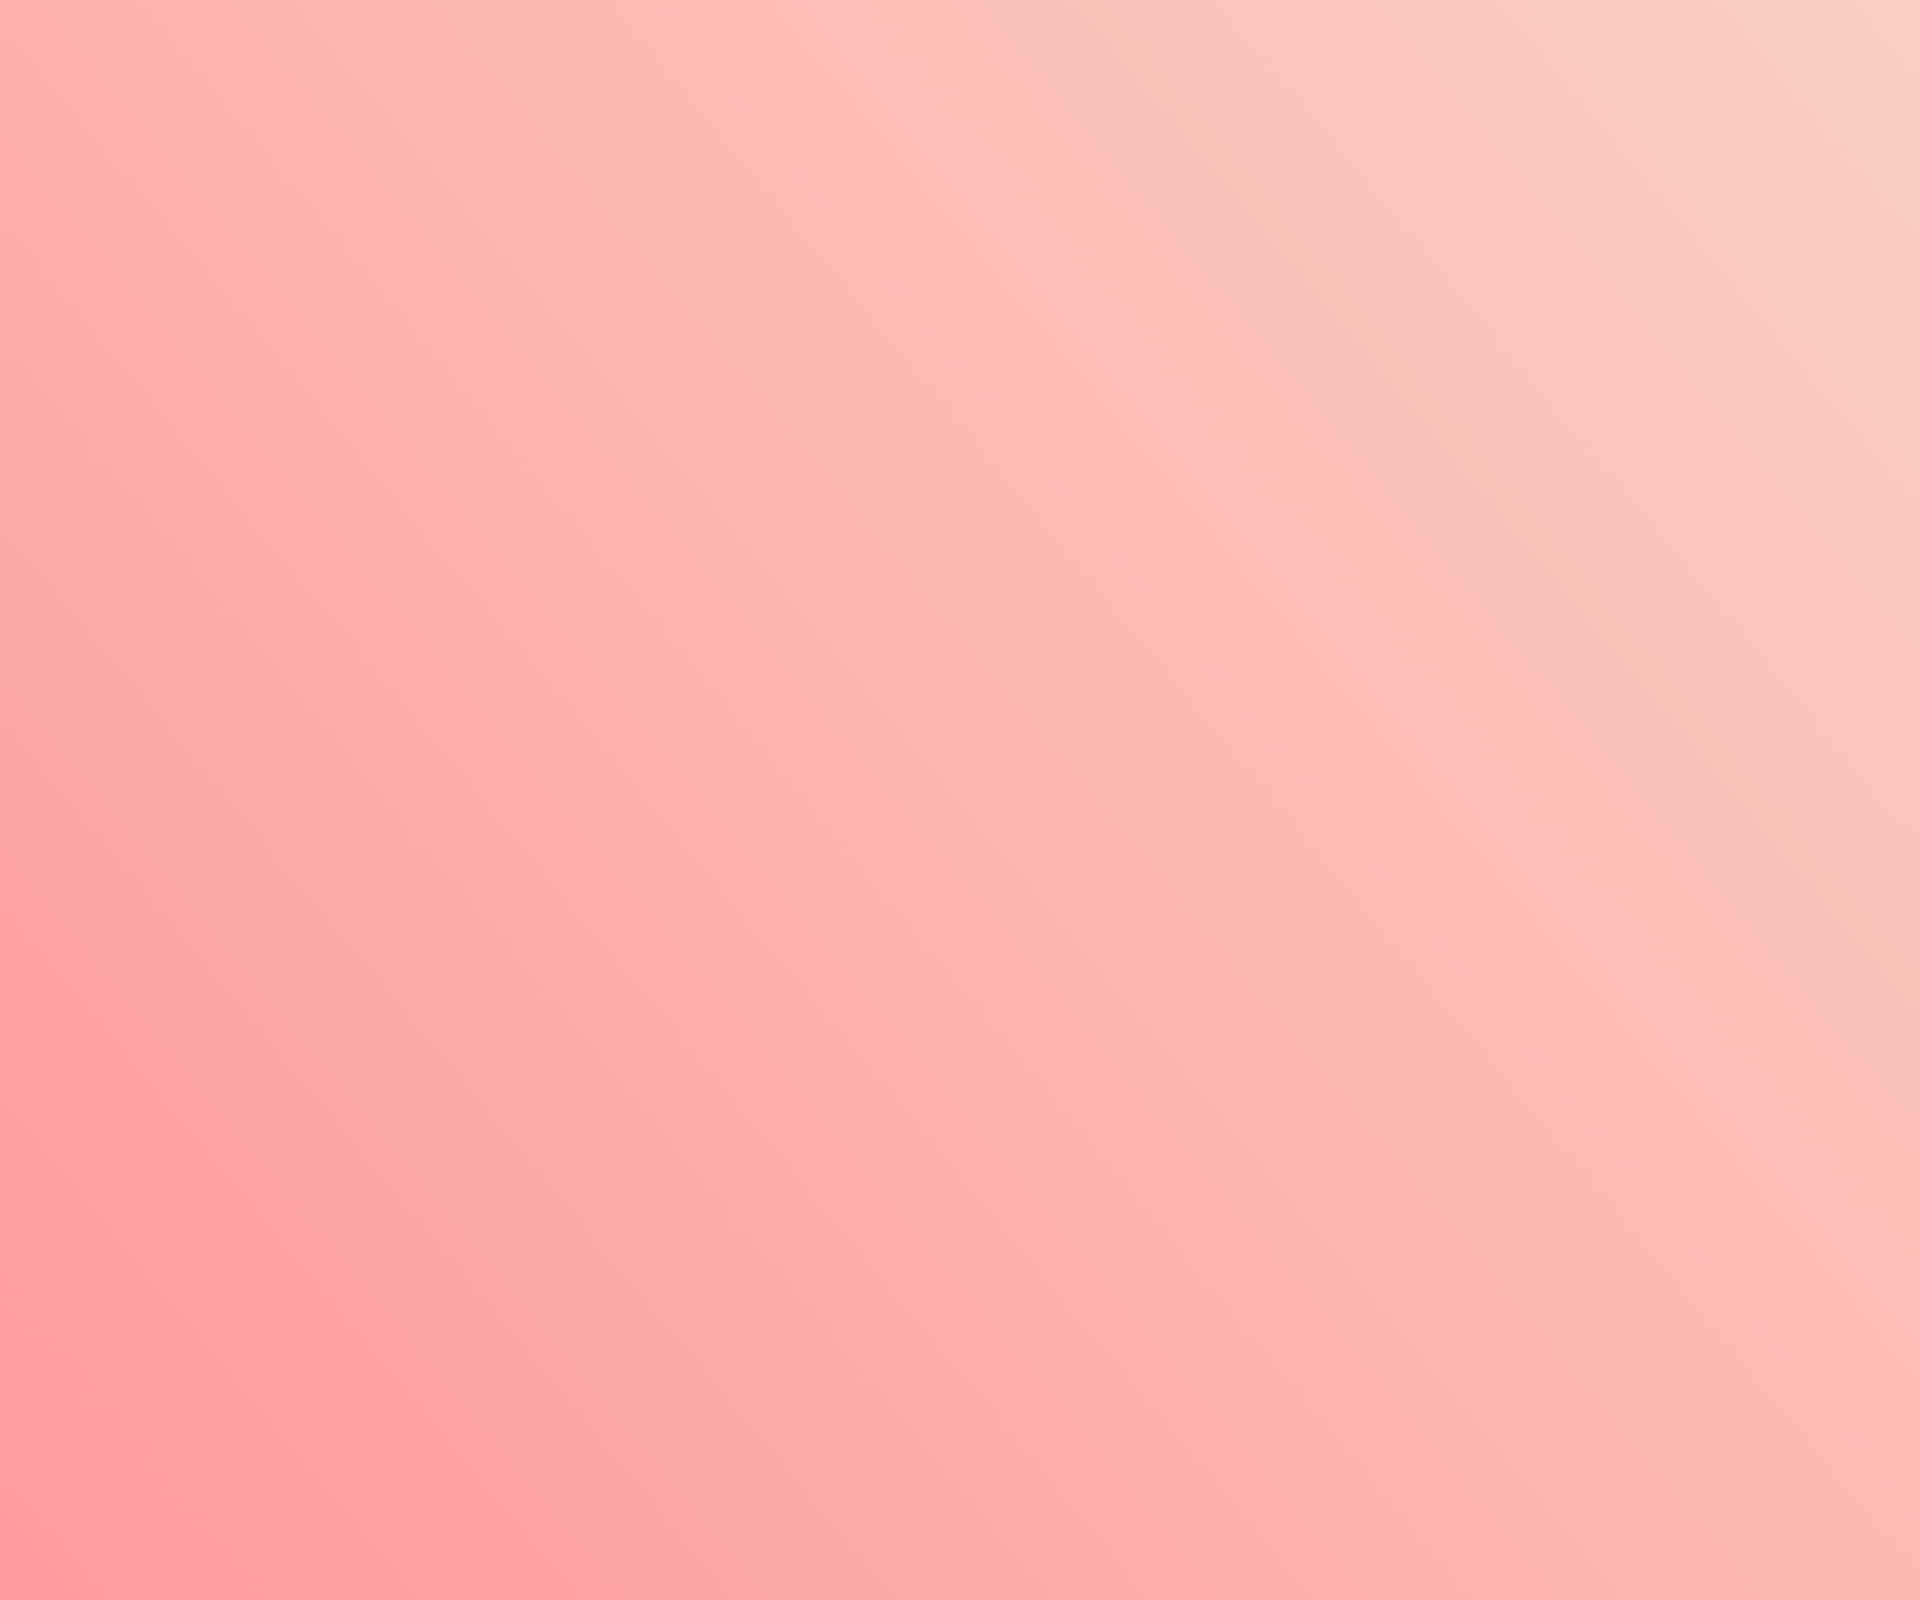 Simple Gradient Pink Blush Background